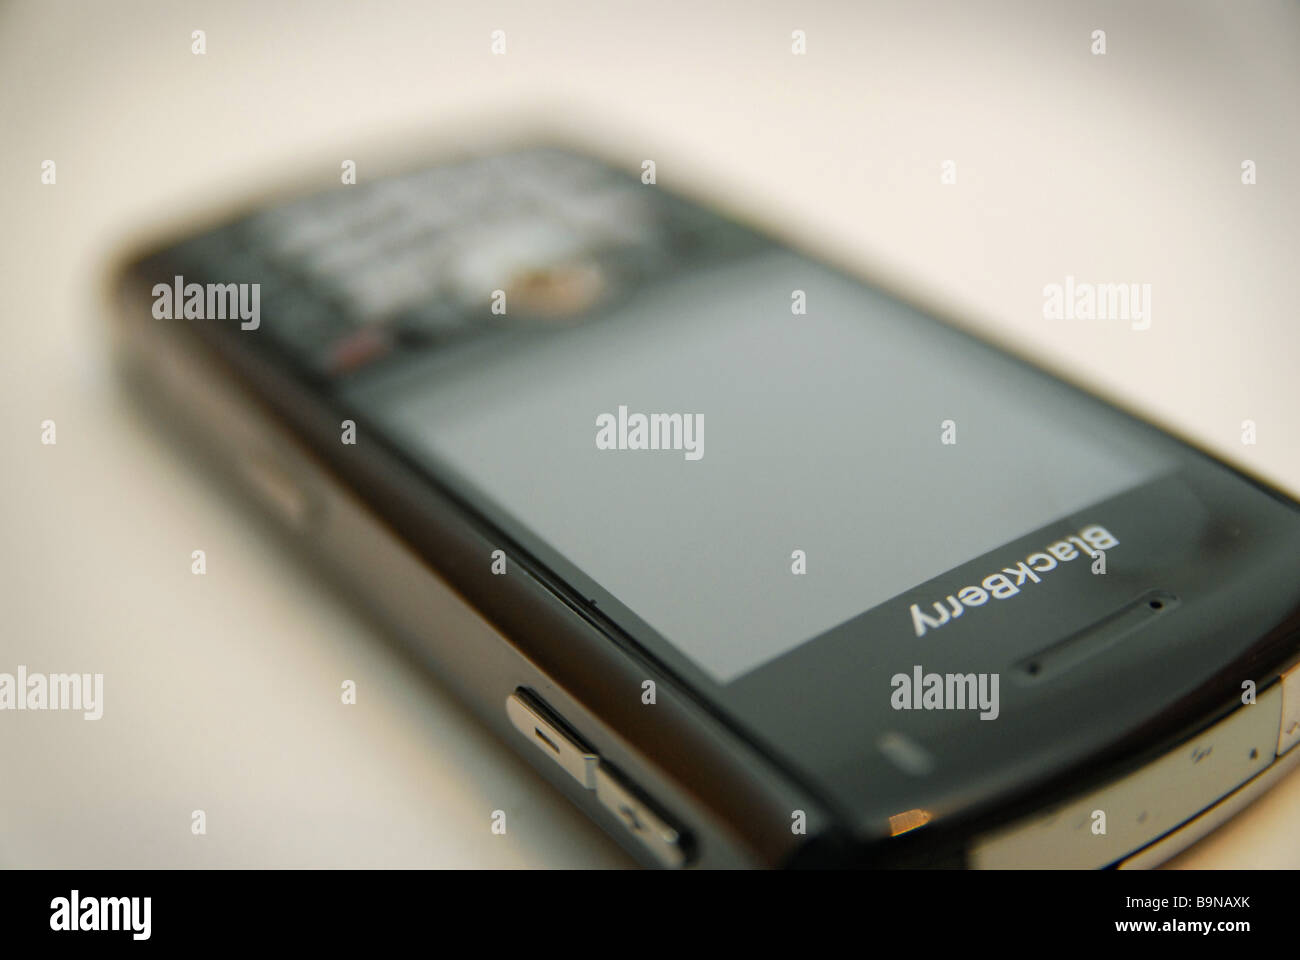 A Blackbery mobile phone/device, (creative focus) Stock Photo